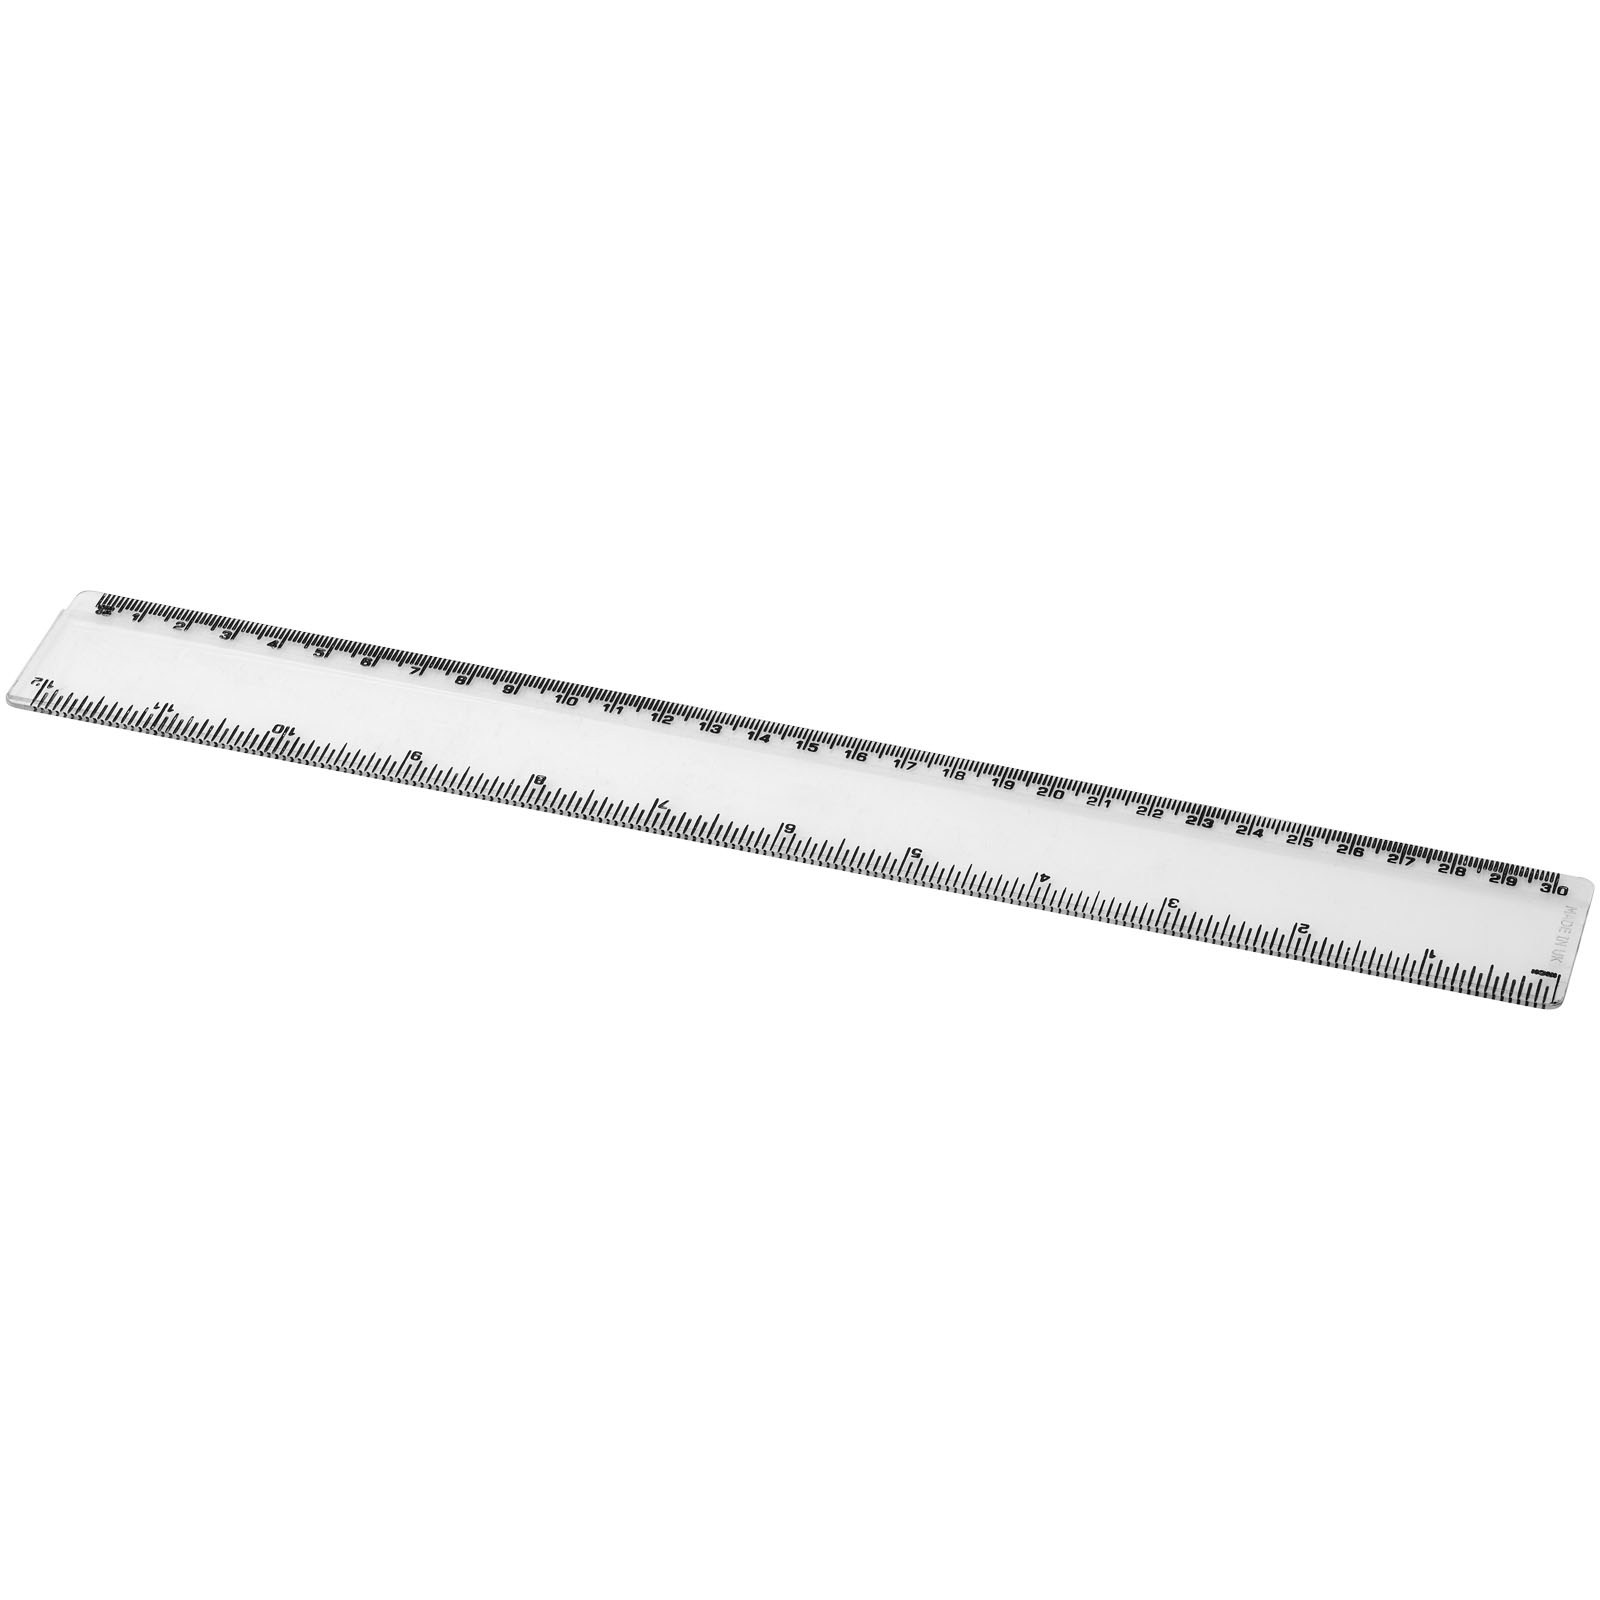 Advertising Desk Accessories - Renzo 30 cm plastic ruler - 0